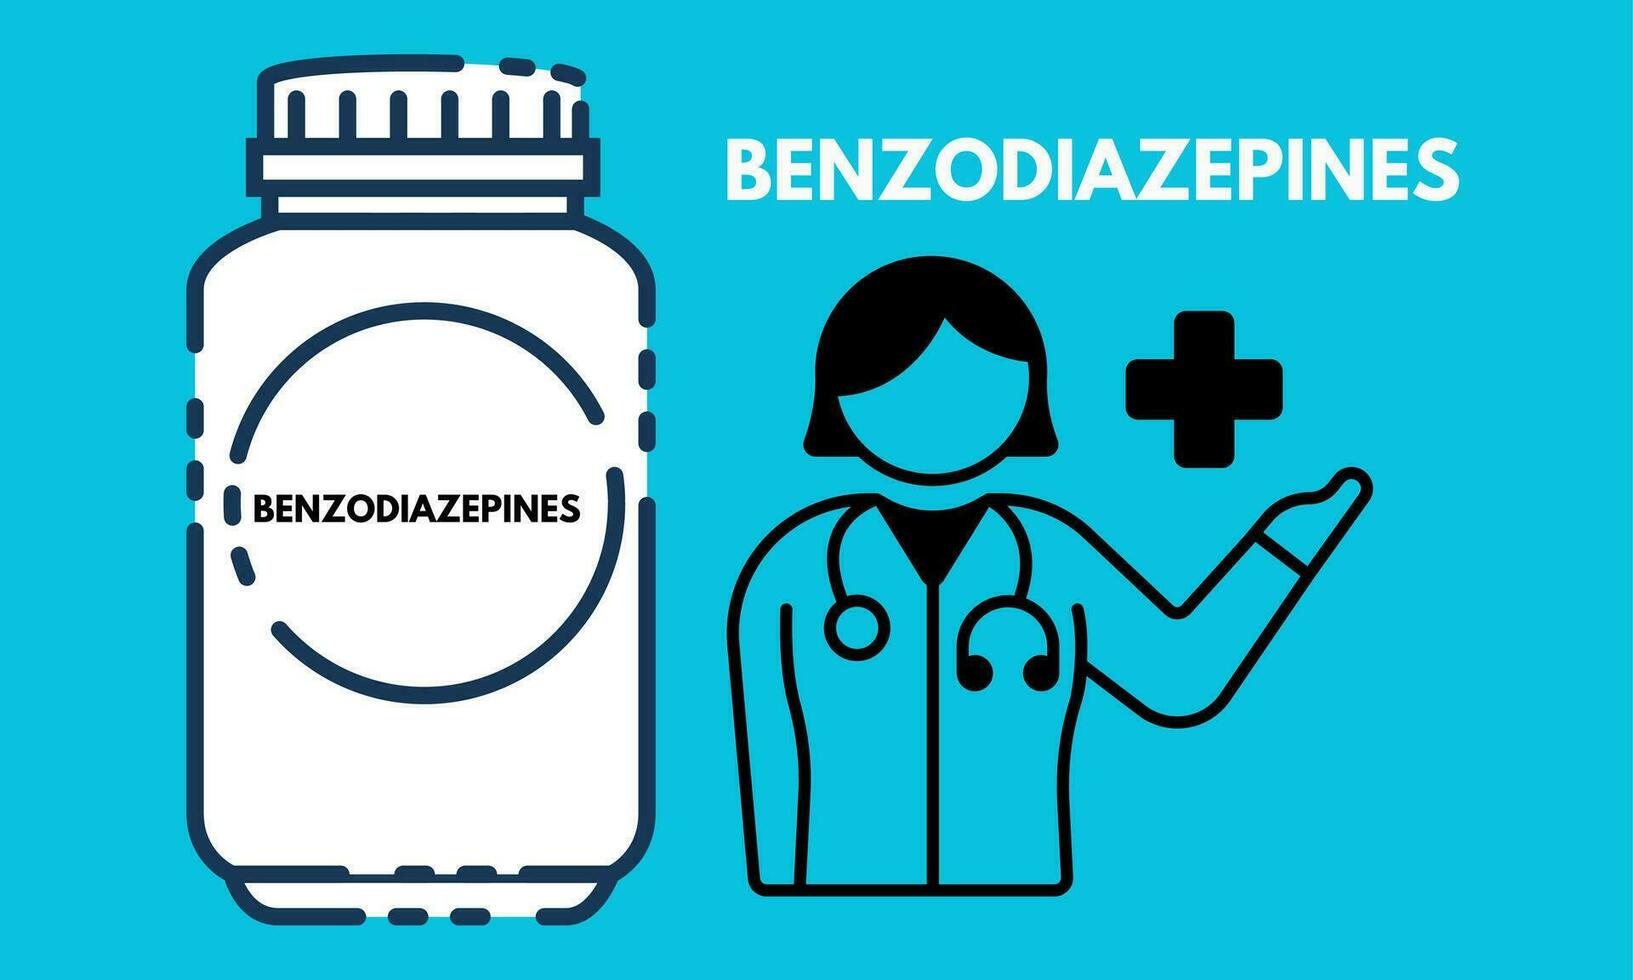 Benzodiazepine. Benzodiazepine Tabletten im rx Rezept Droge Flasche Vektor Illustration